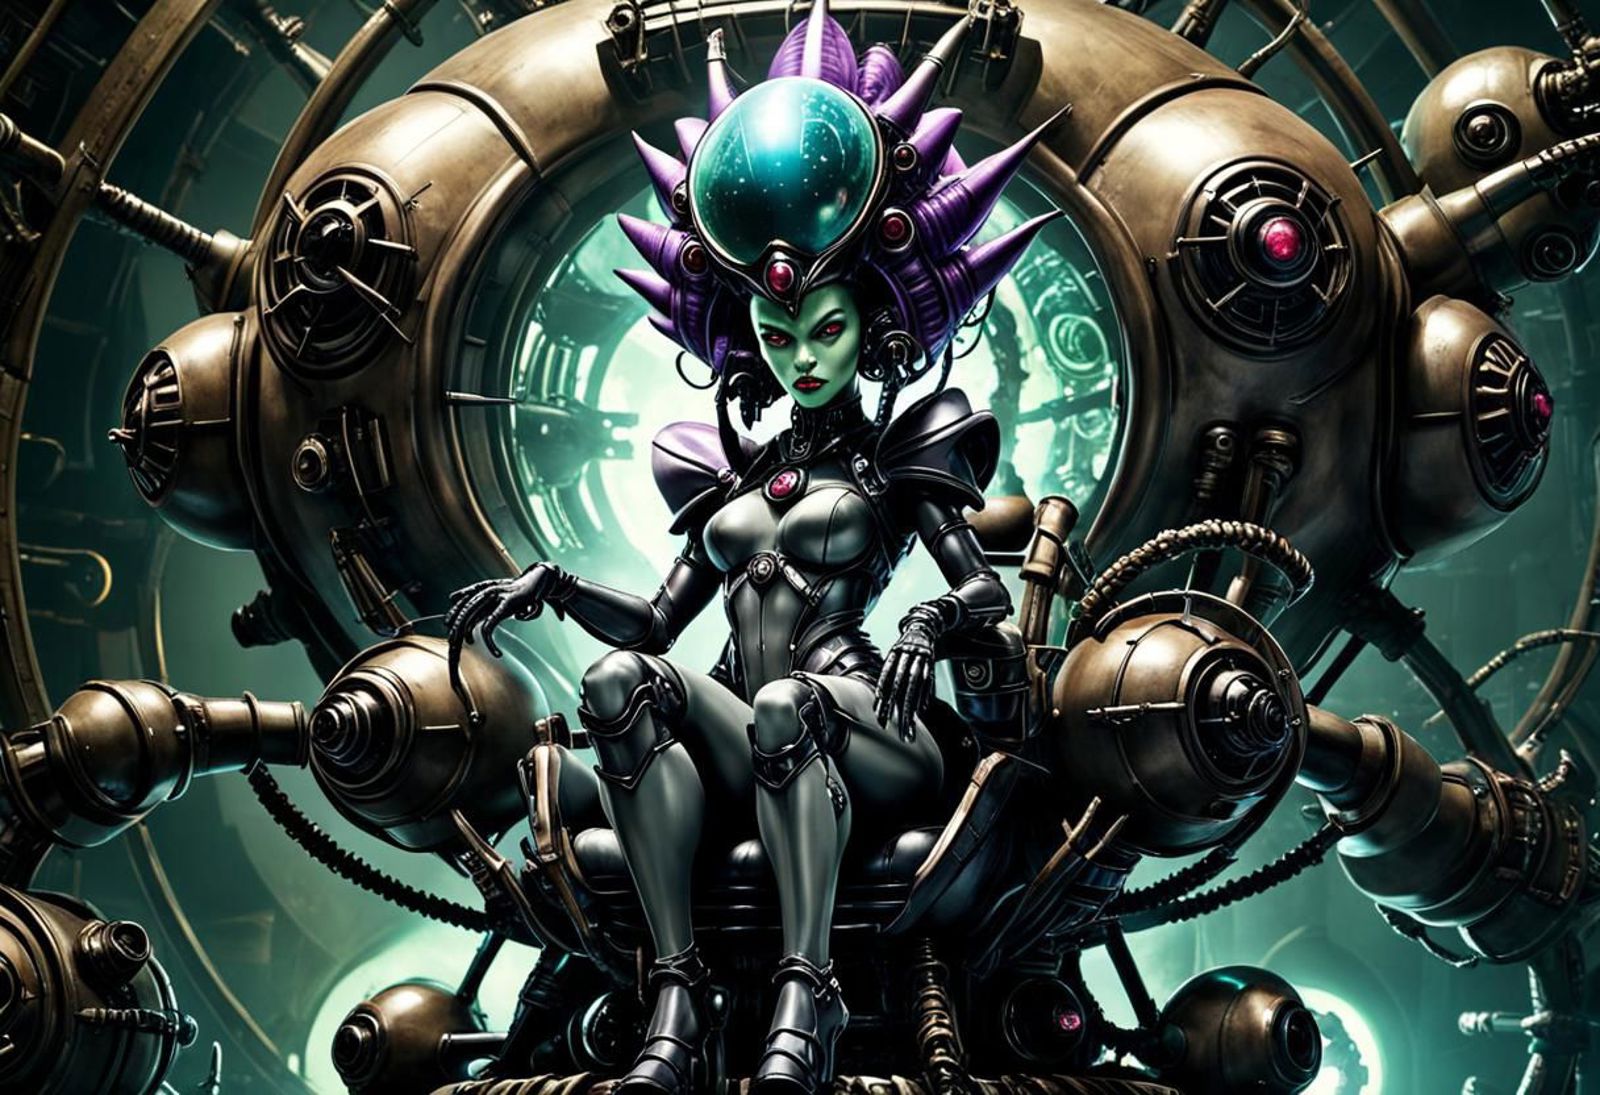 Envy Atompunk XL 01 image by Dracos